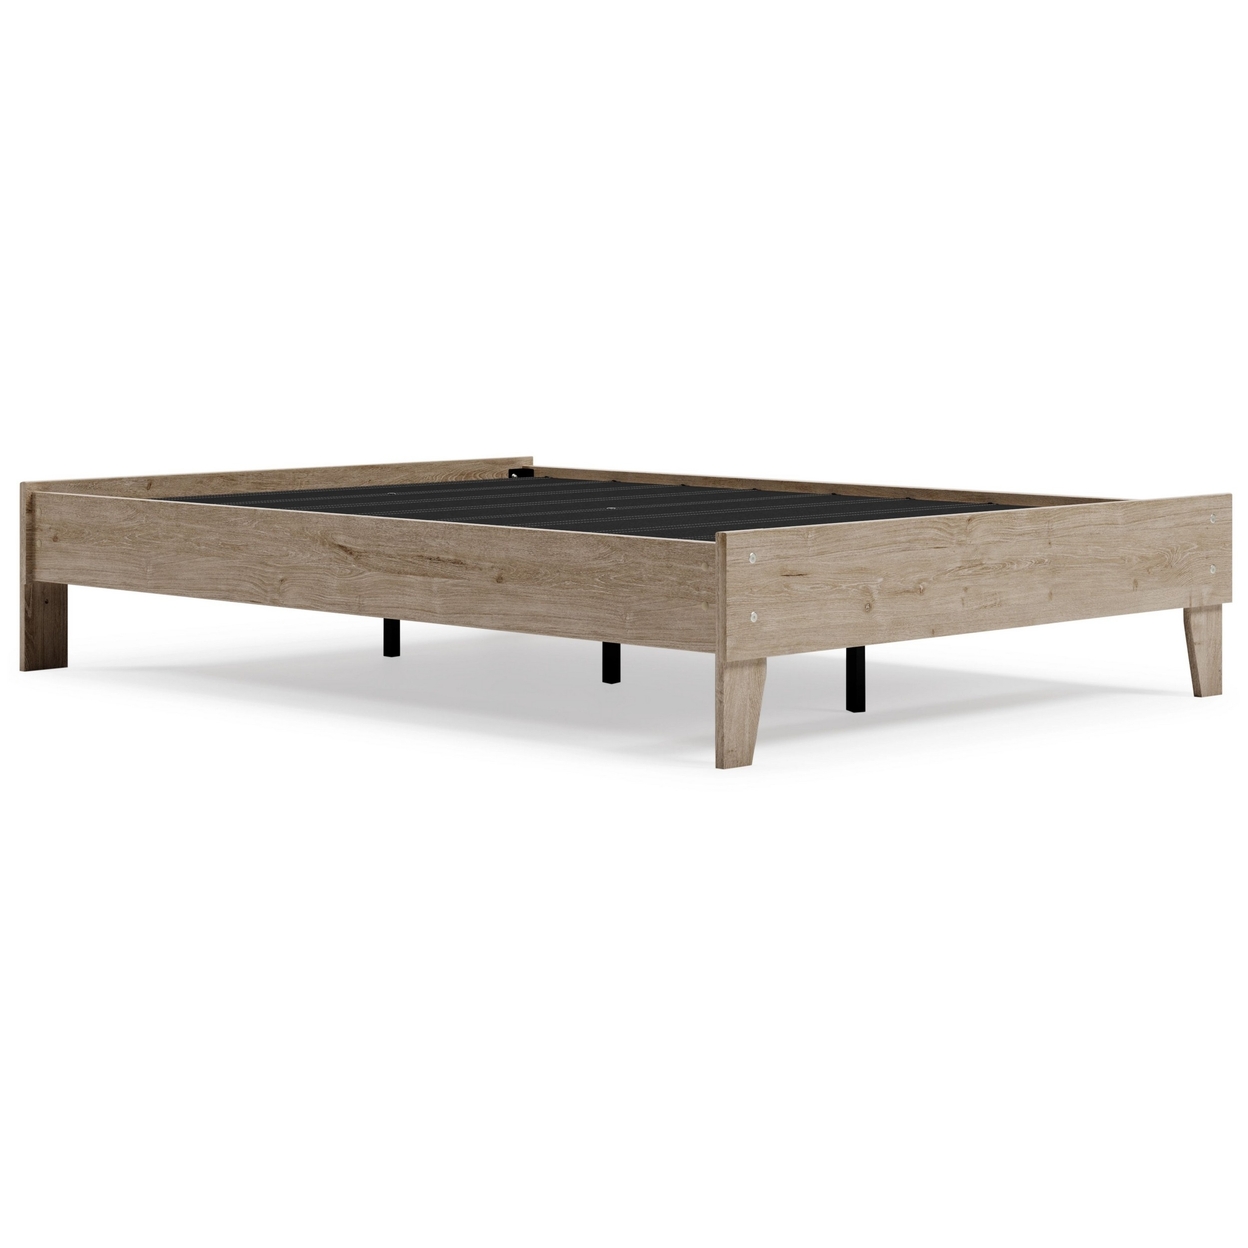 Sof Full Size Platform Bed, Low Profile, Footboard, Muted Brown Finish- Saltoro Sherpi